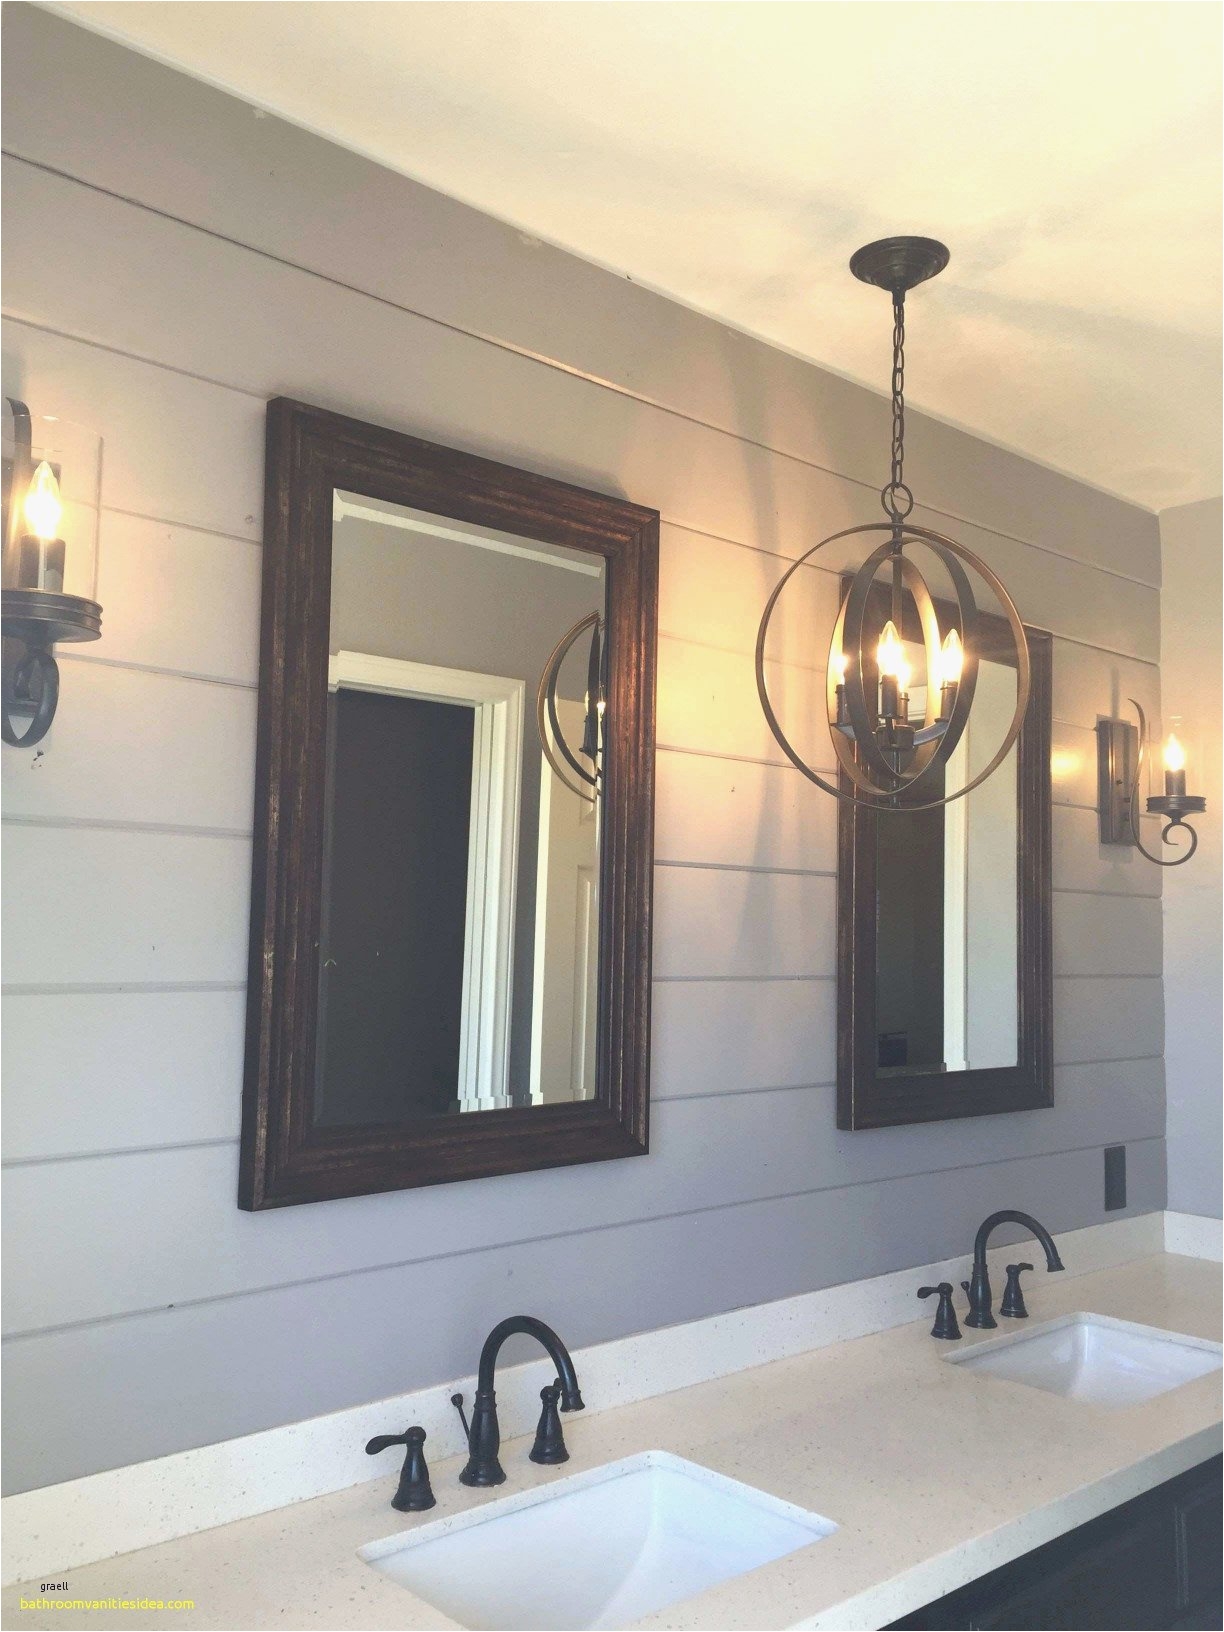 diy bathroom lighting bathroom vanity mirror inspirational diy light luxury h sink install i 0d